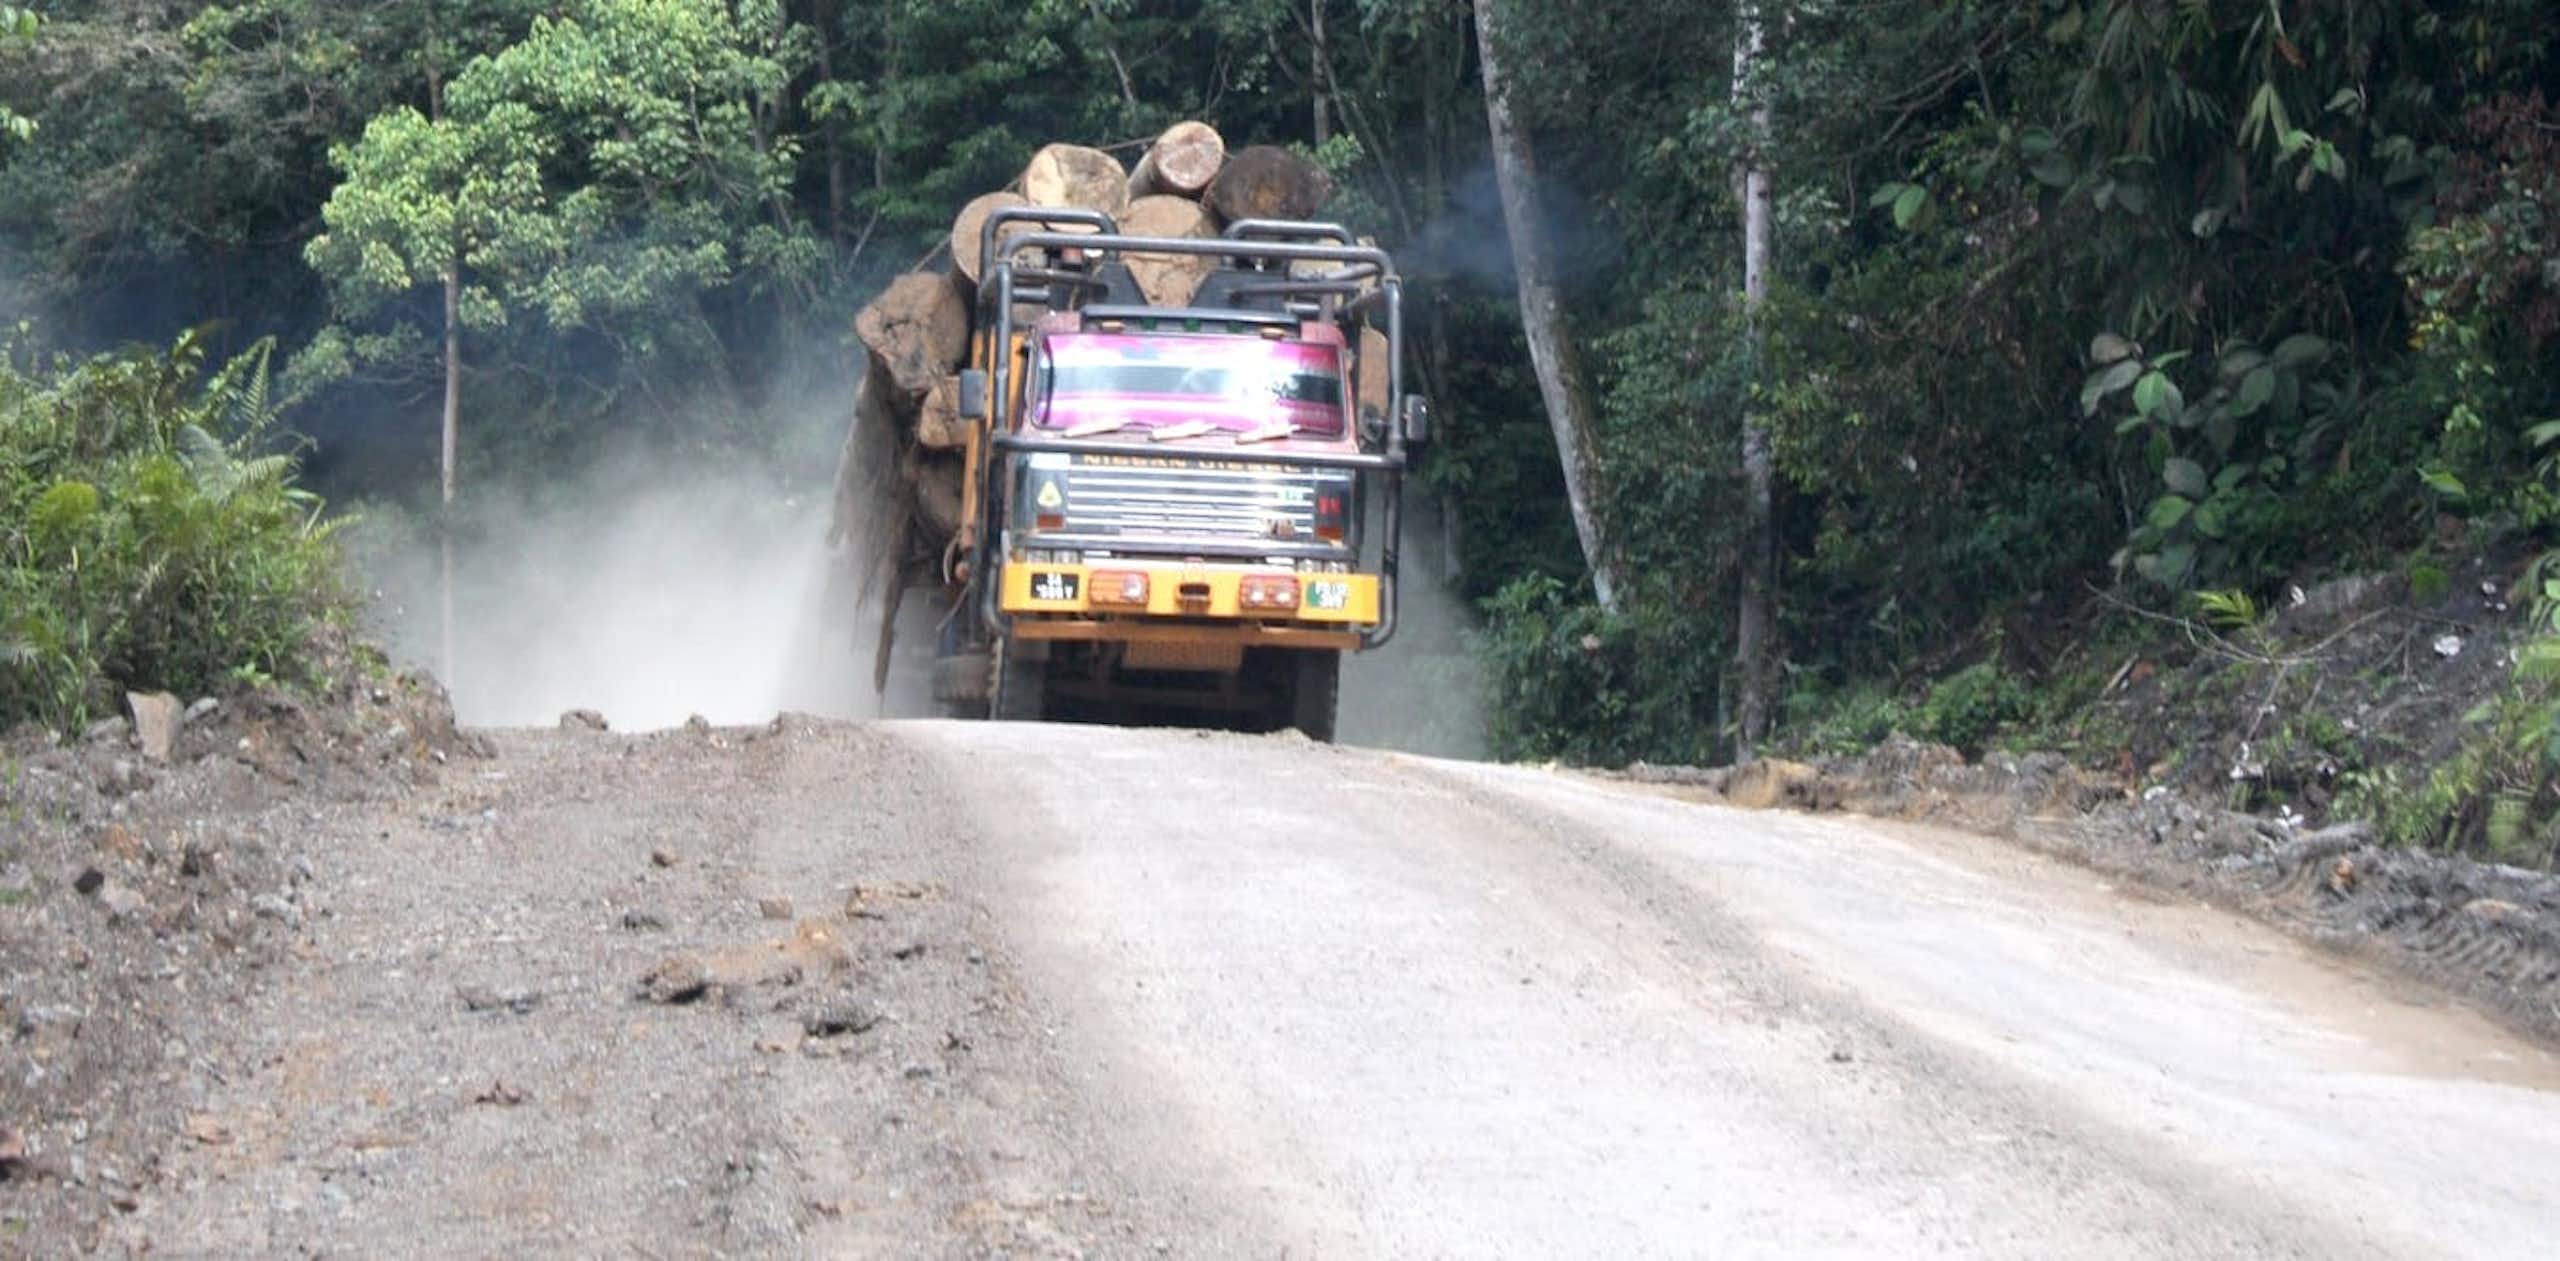 Jalan hantu: riset kami tunjukkan luasnya jalan ilegal yang membabat hutan Indonesia